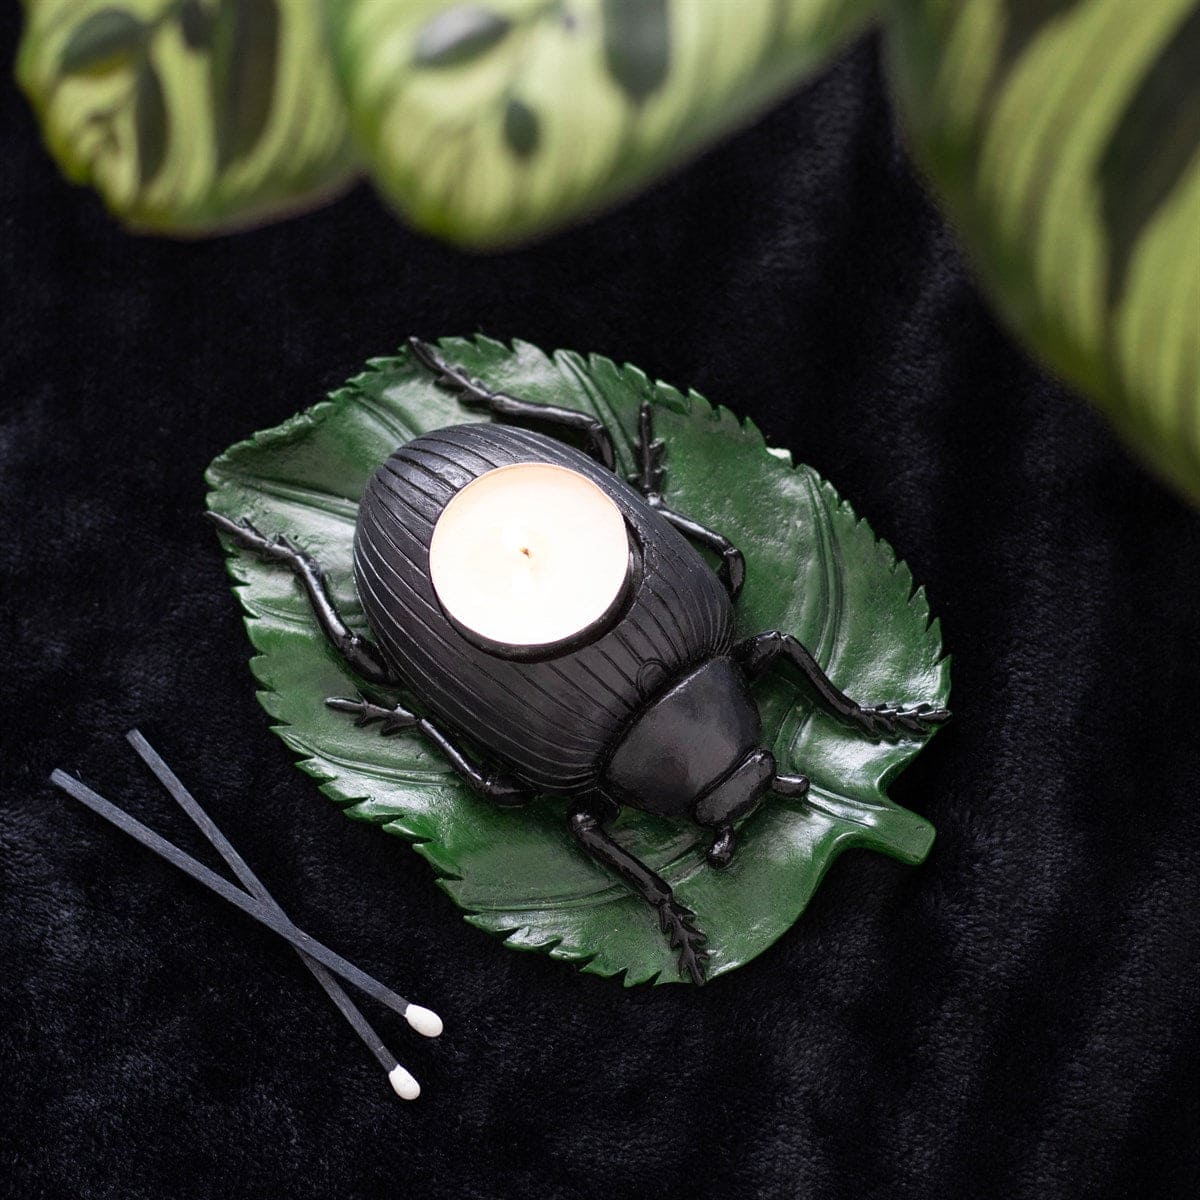 Beetle Tealight Candle Holder - Tea Light Holder by Spirit of equinox